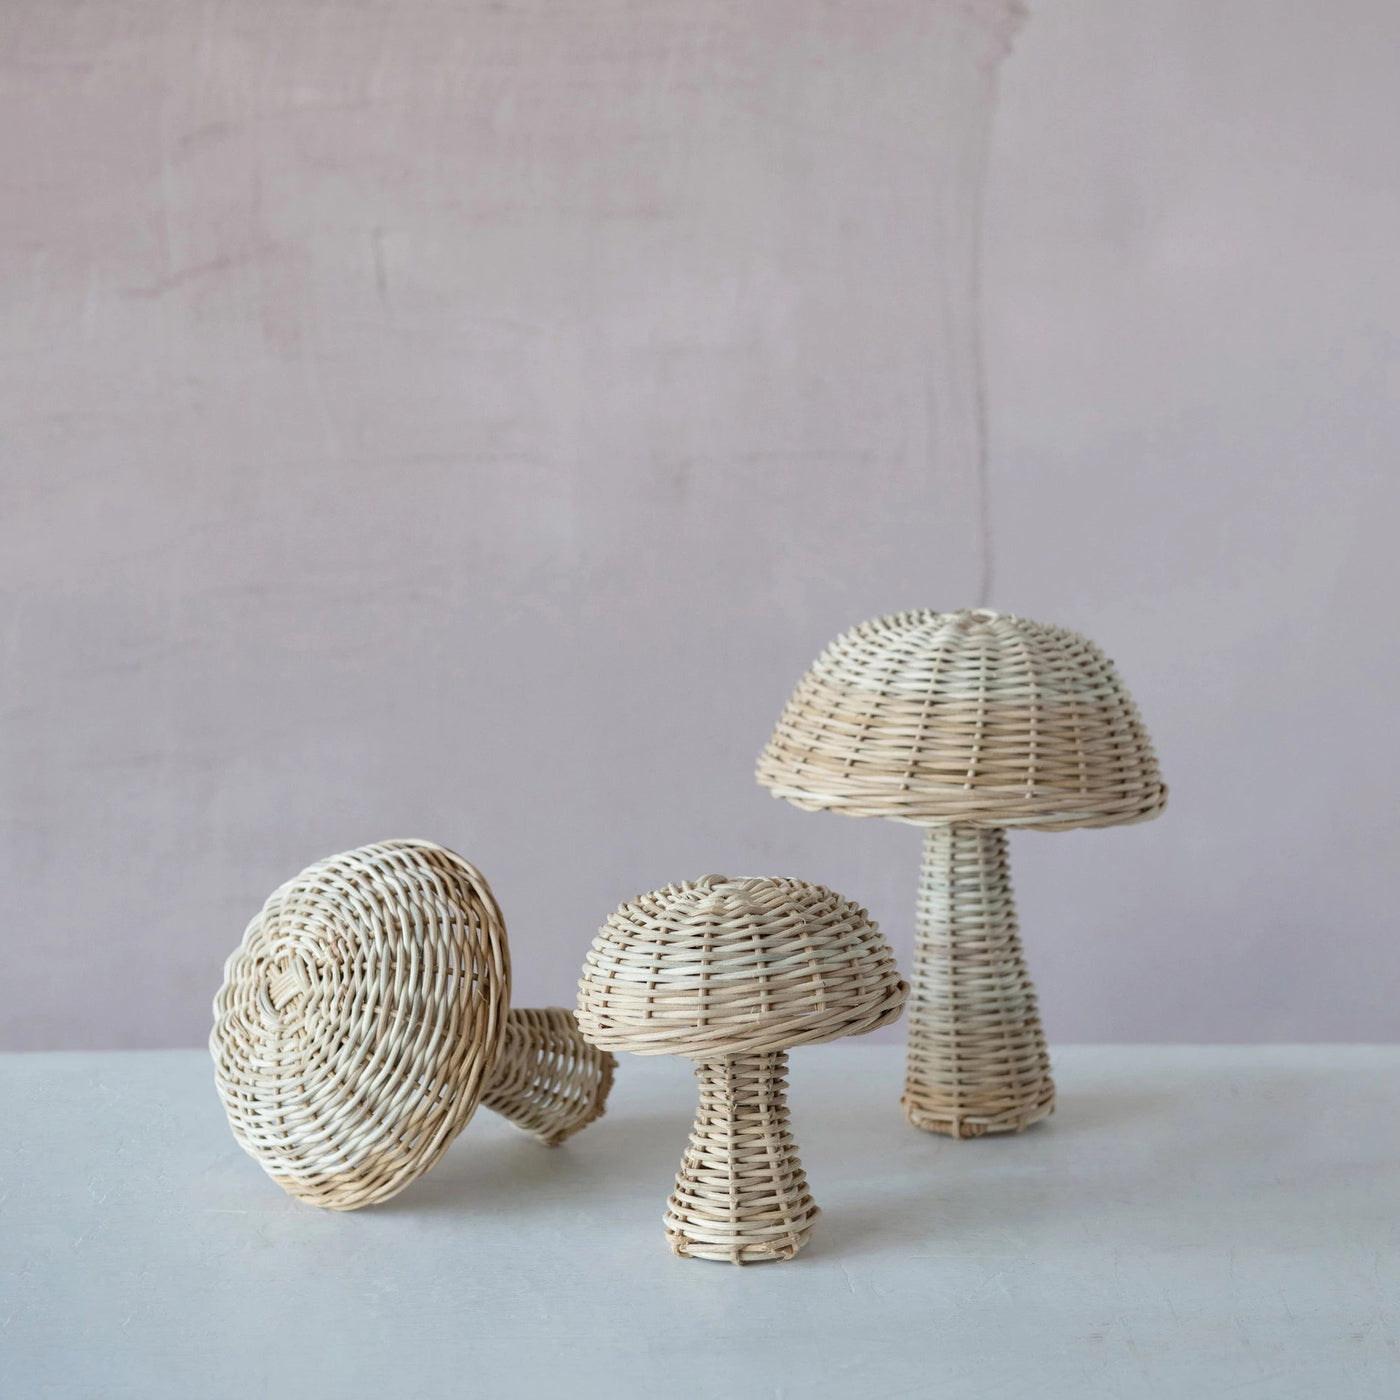 Hand-Woven Wicker Mushrooms